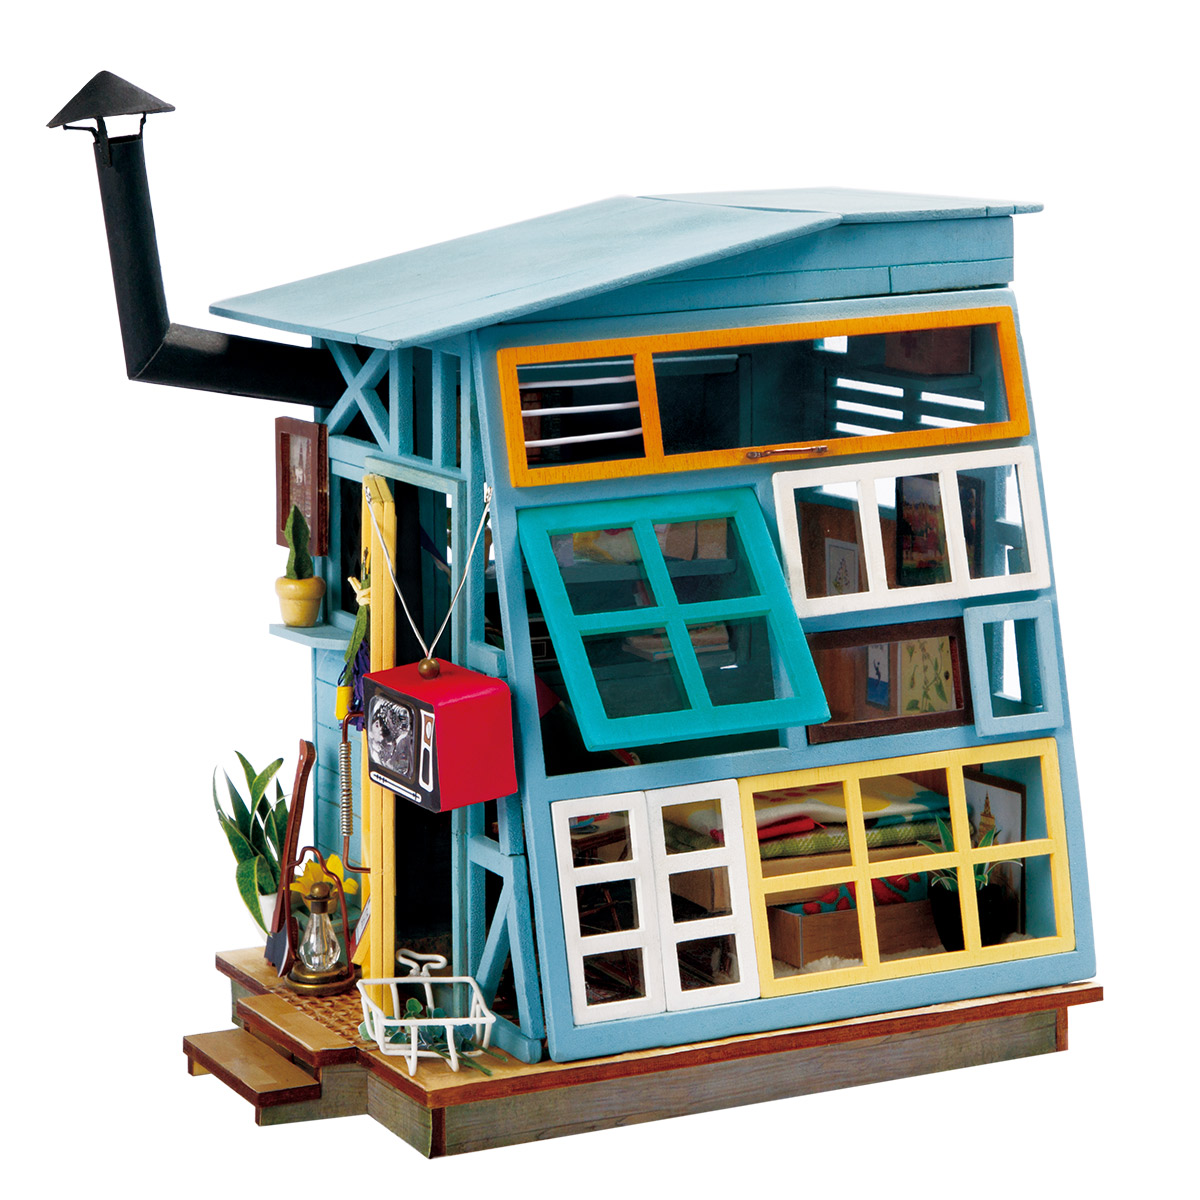 Rolife Flavory Café DIY Miniature House Kit DG162 - Rolife